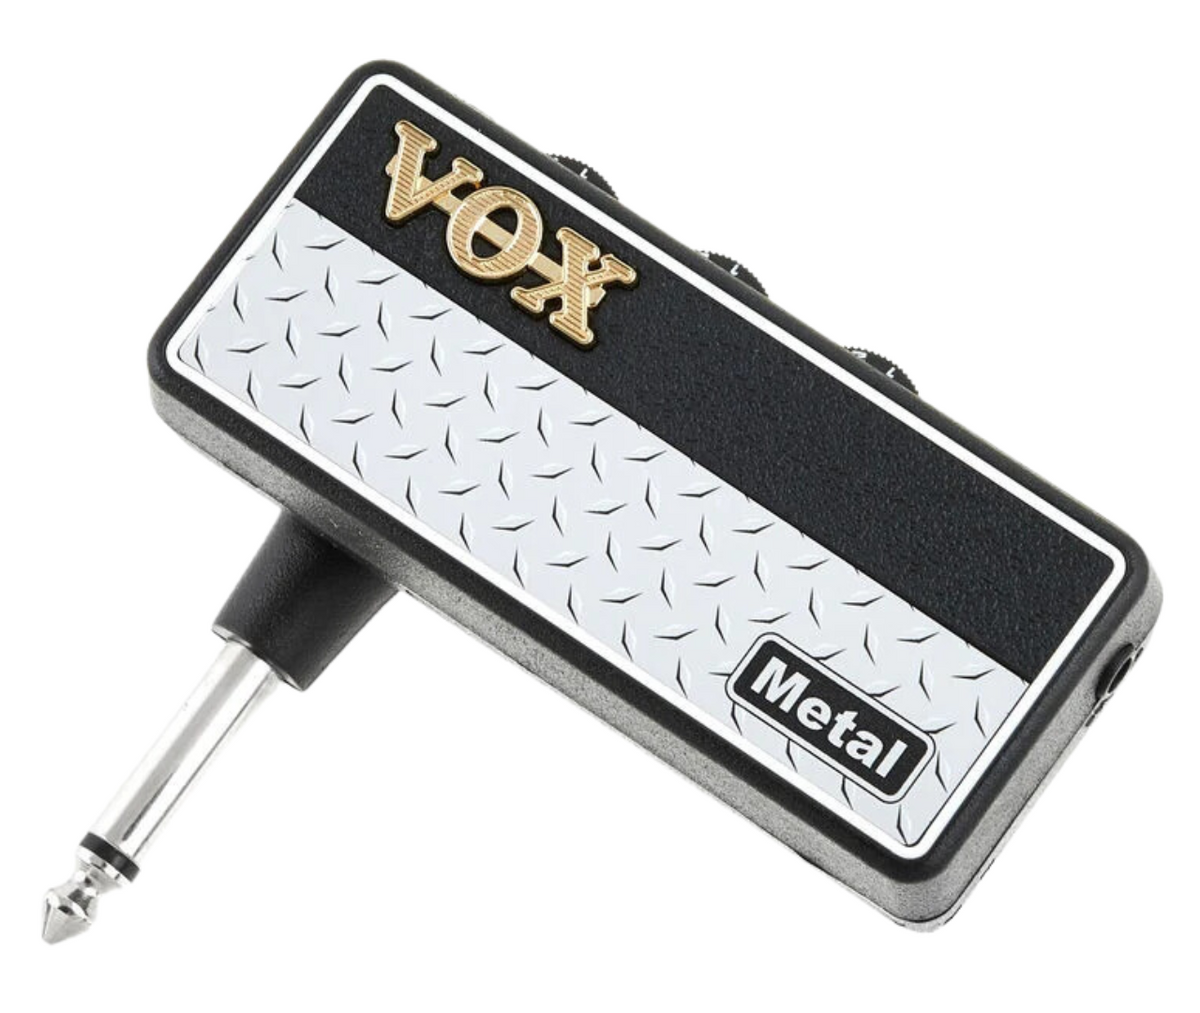 VOX AP2MT – Amplug 2 Metal Guitar Amplifier Headphones, Extreme High-gain Sound of US-made Amp